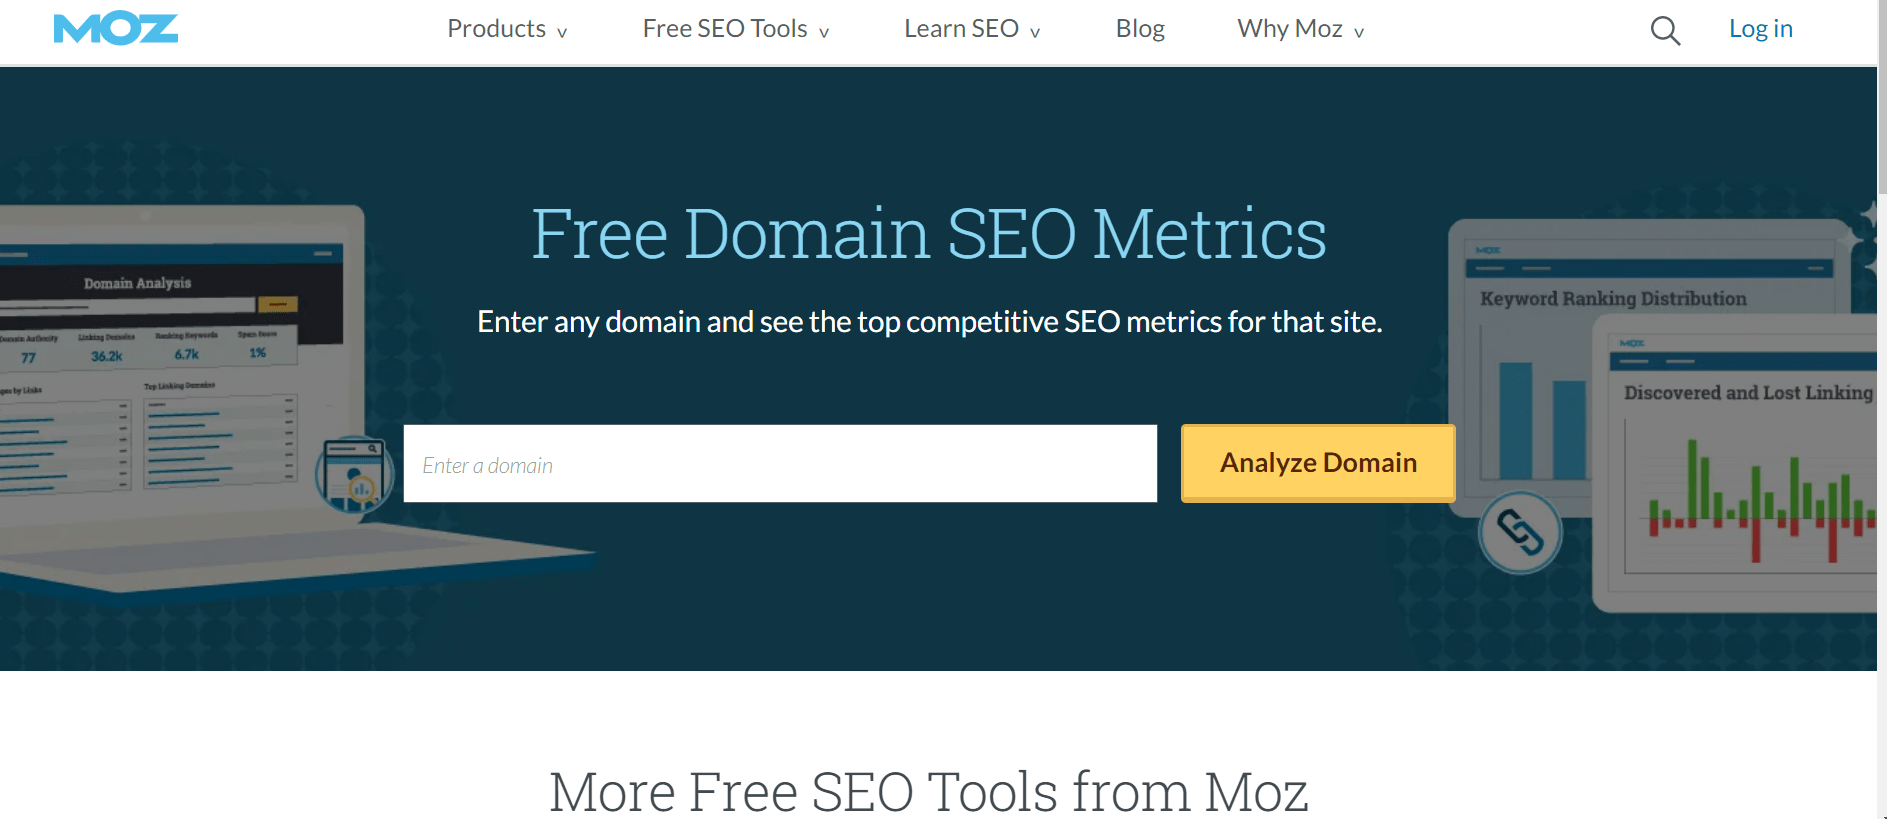 Moz Free SEO Blogging Tools for Beginner